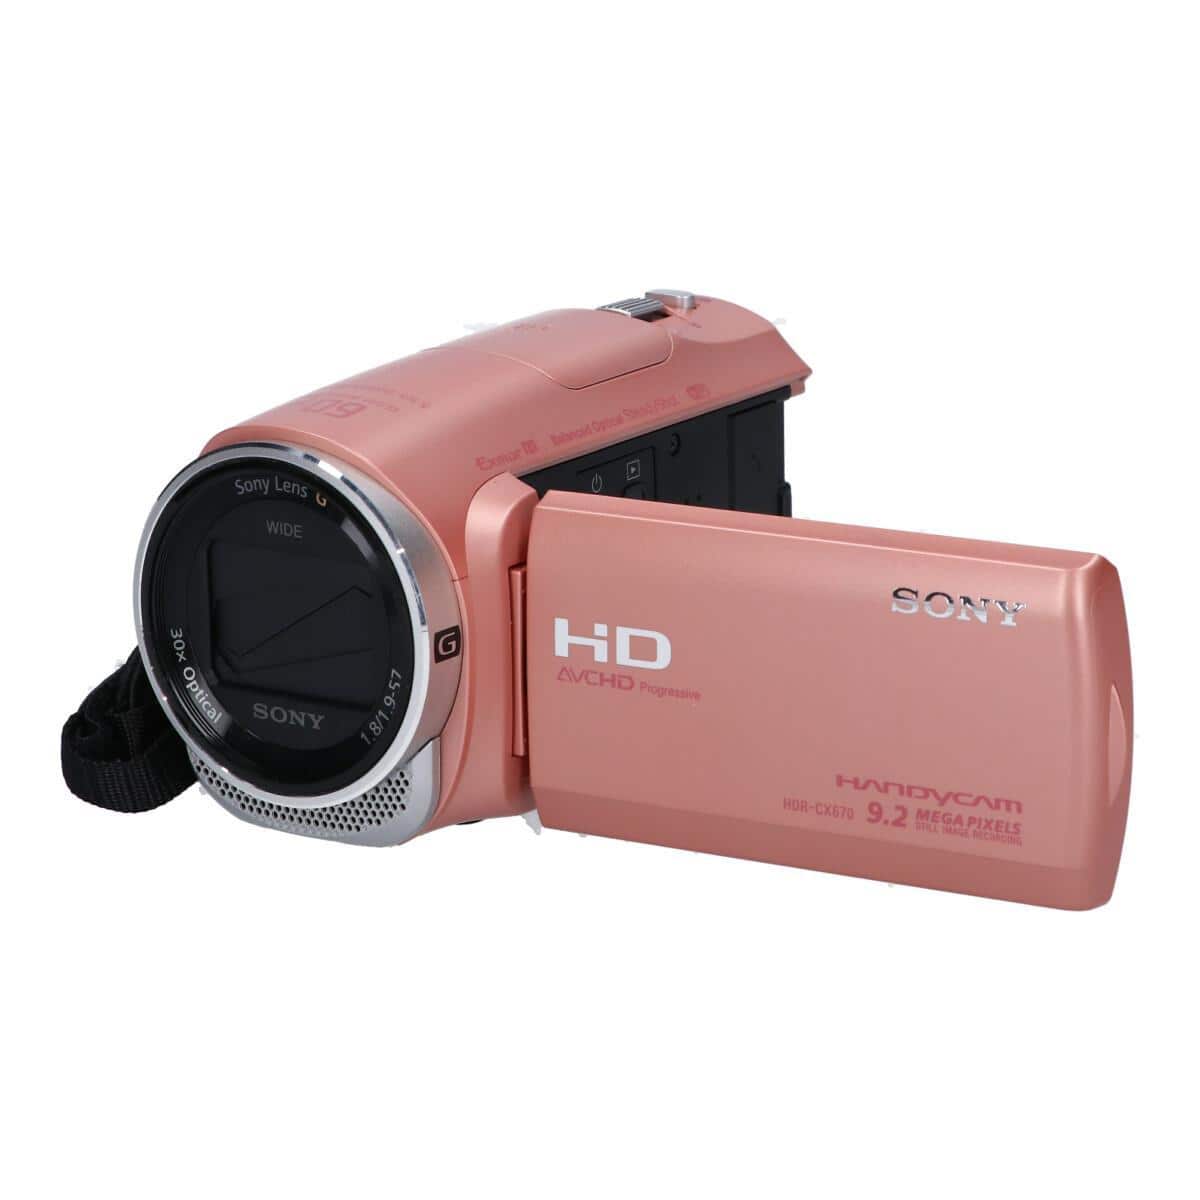 SONY ソニー HANDYCAM HDR-CX670 9.2MEGA #660 - ビデオカメラ